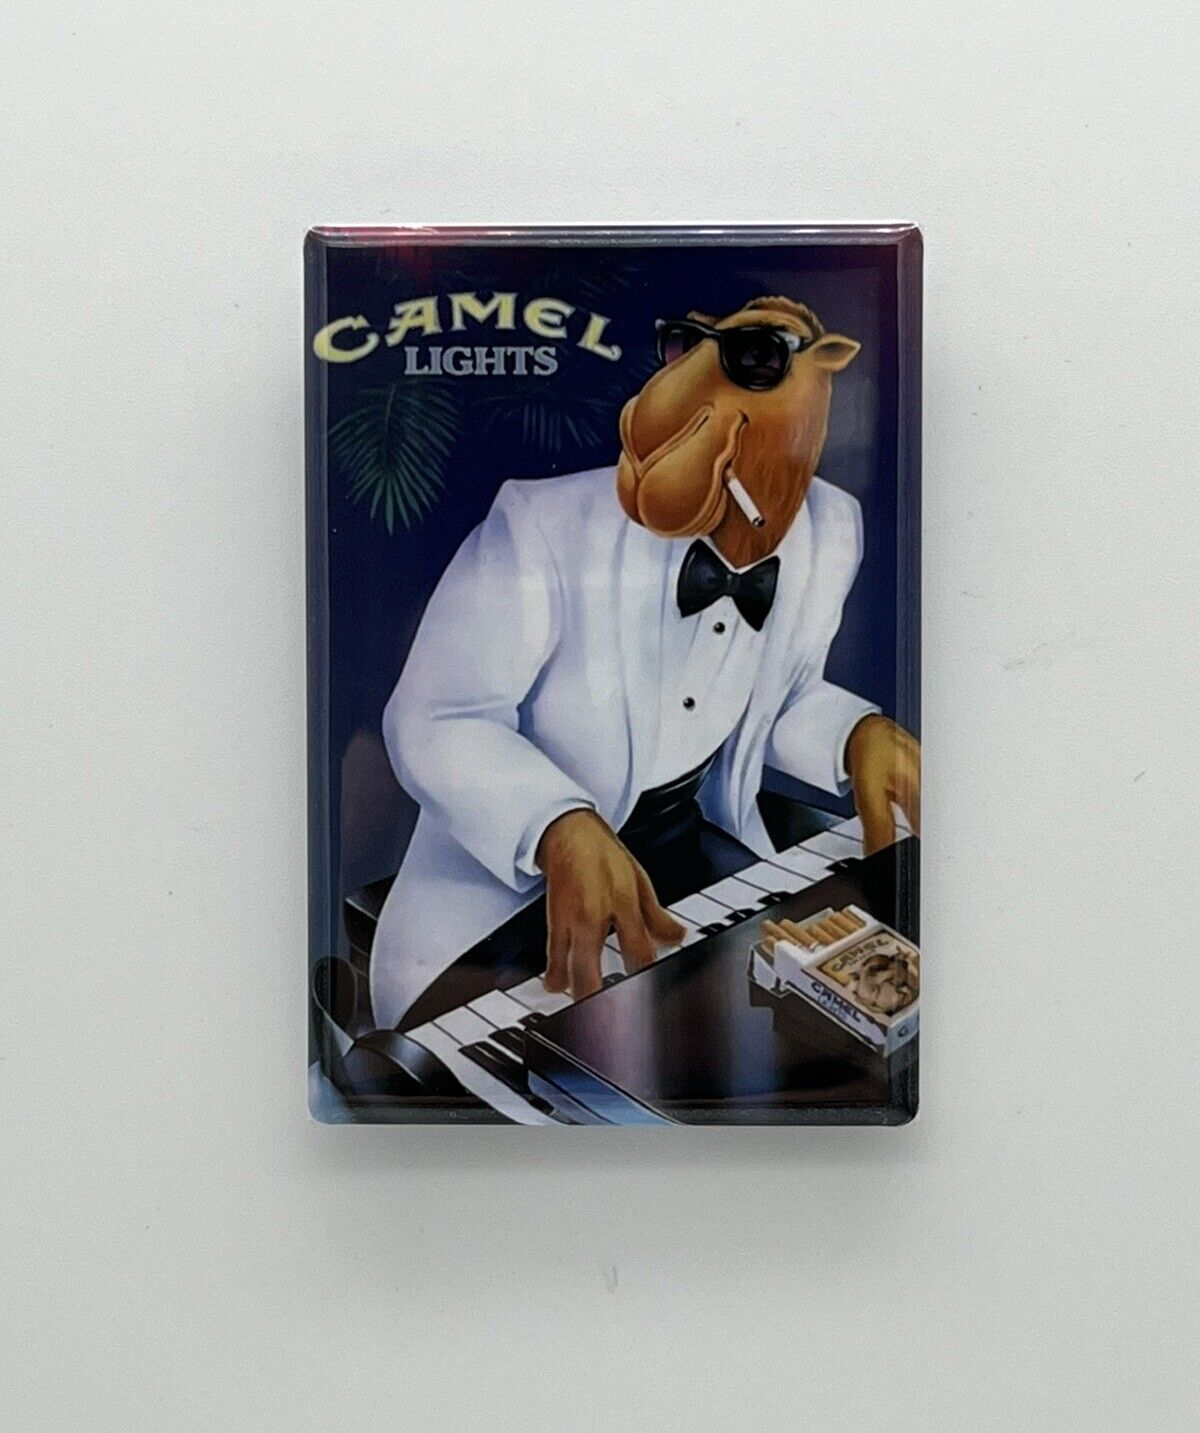 90S Retro Camel Light Cigarettes Joe Camel Refrigerator Magnet